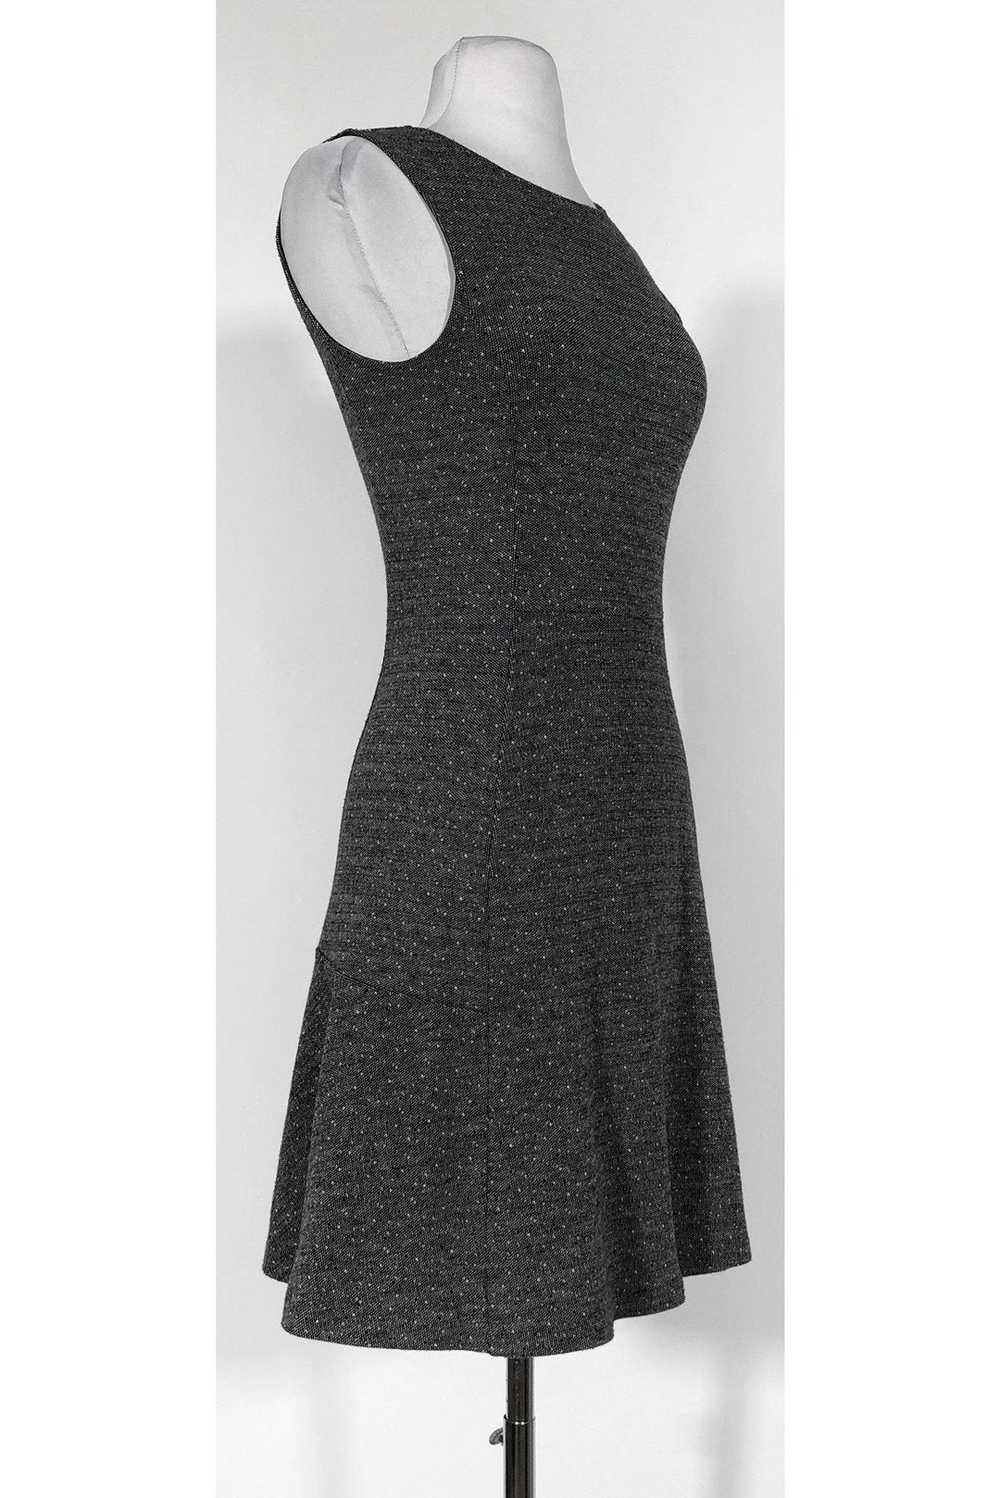 Theory - Black & Grey Fit & Flare Dress Sz 2 - image 2